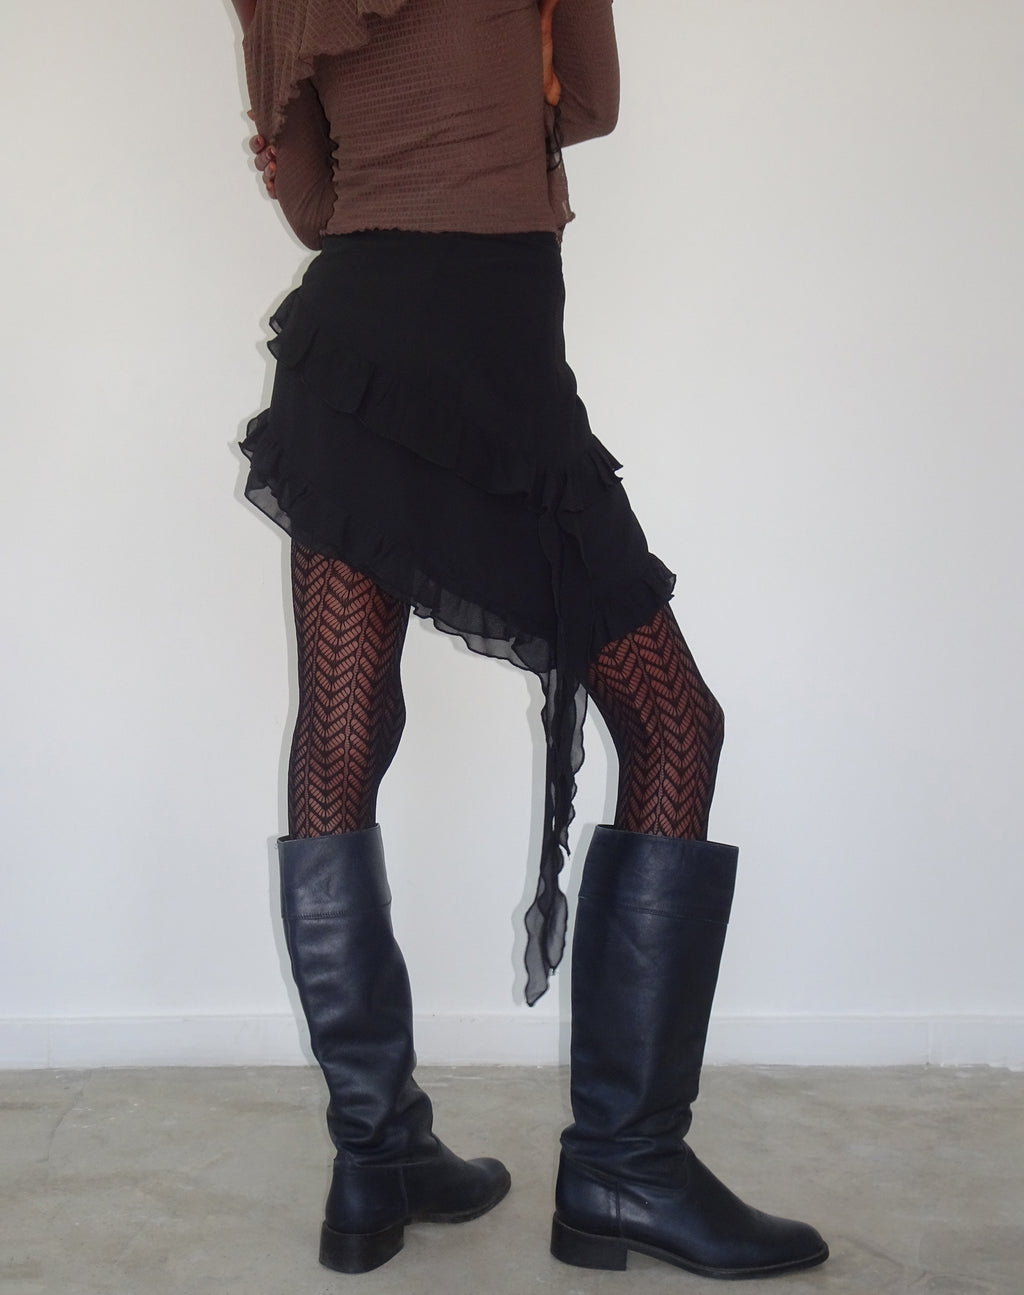 Malinna Ruffle Mini Skirt in Black Chiffon